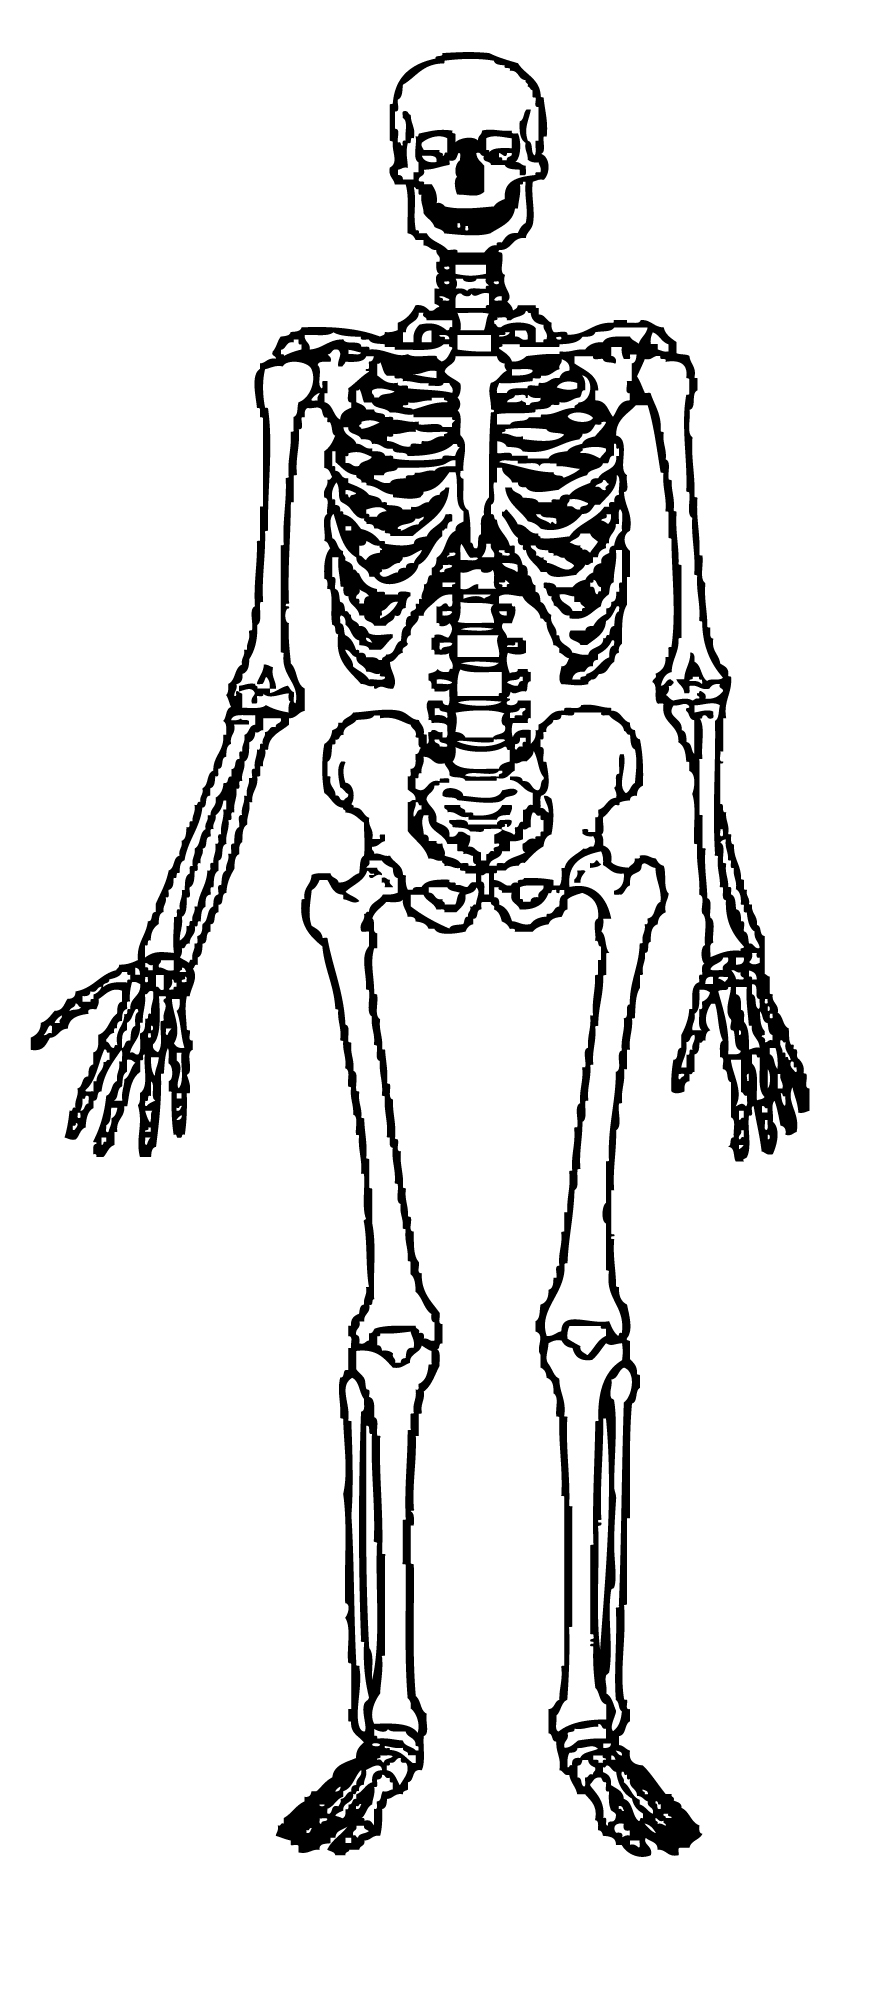 Skeleton Clipart & Skeleton Clip Art Images.